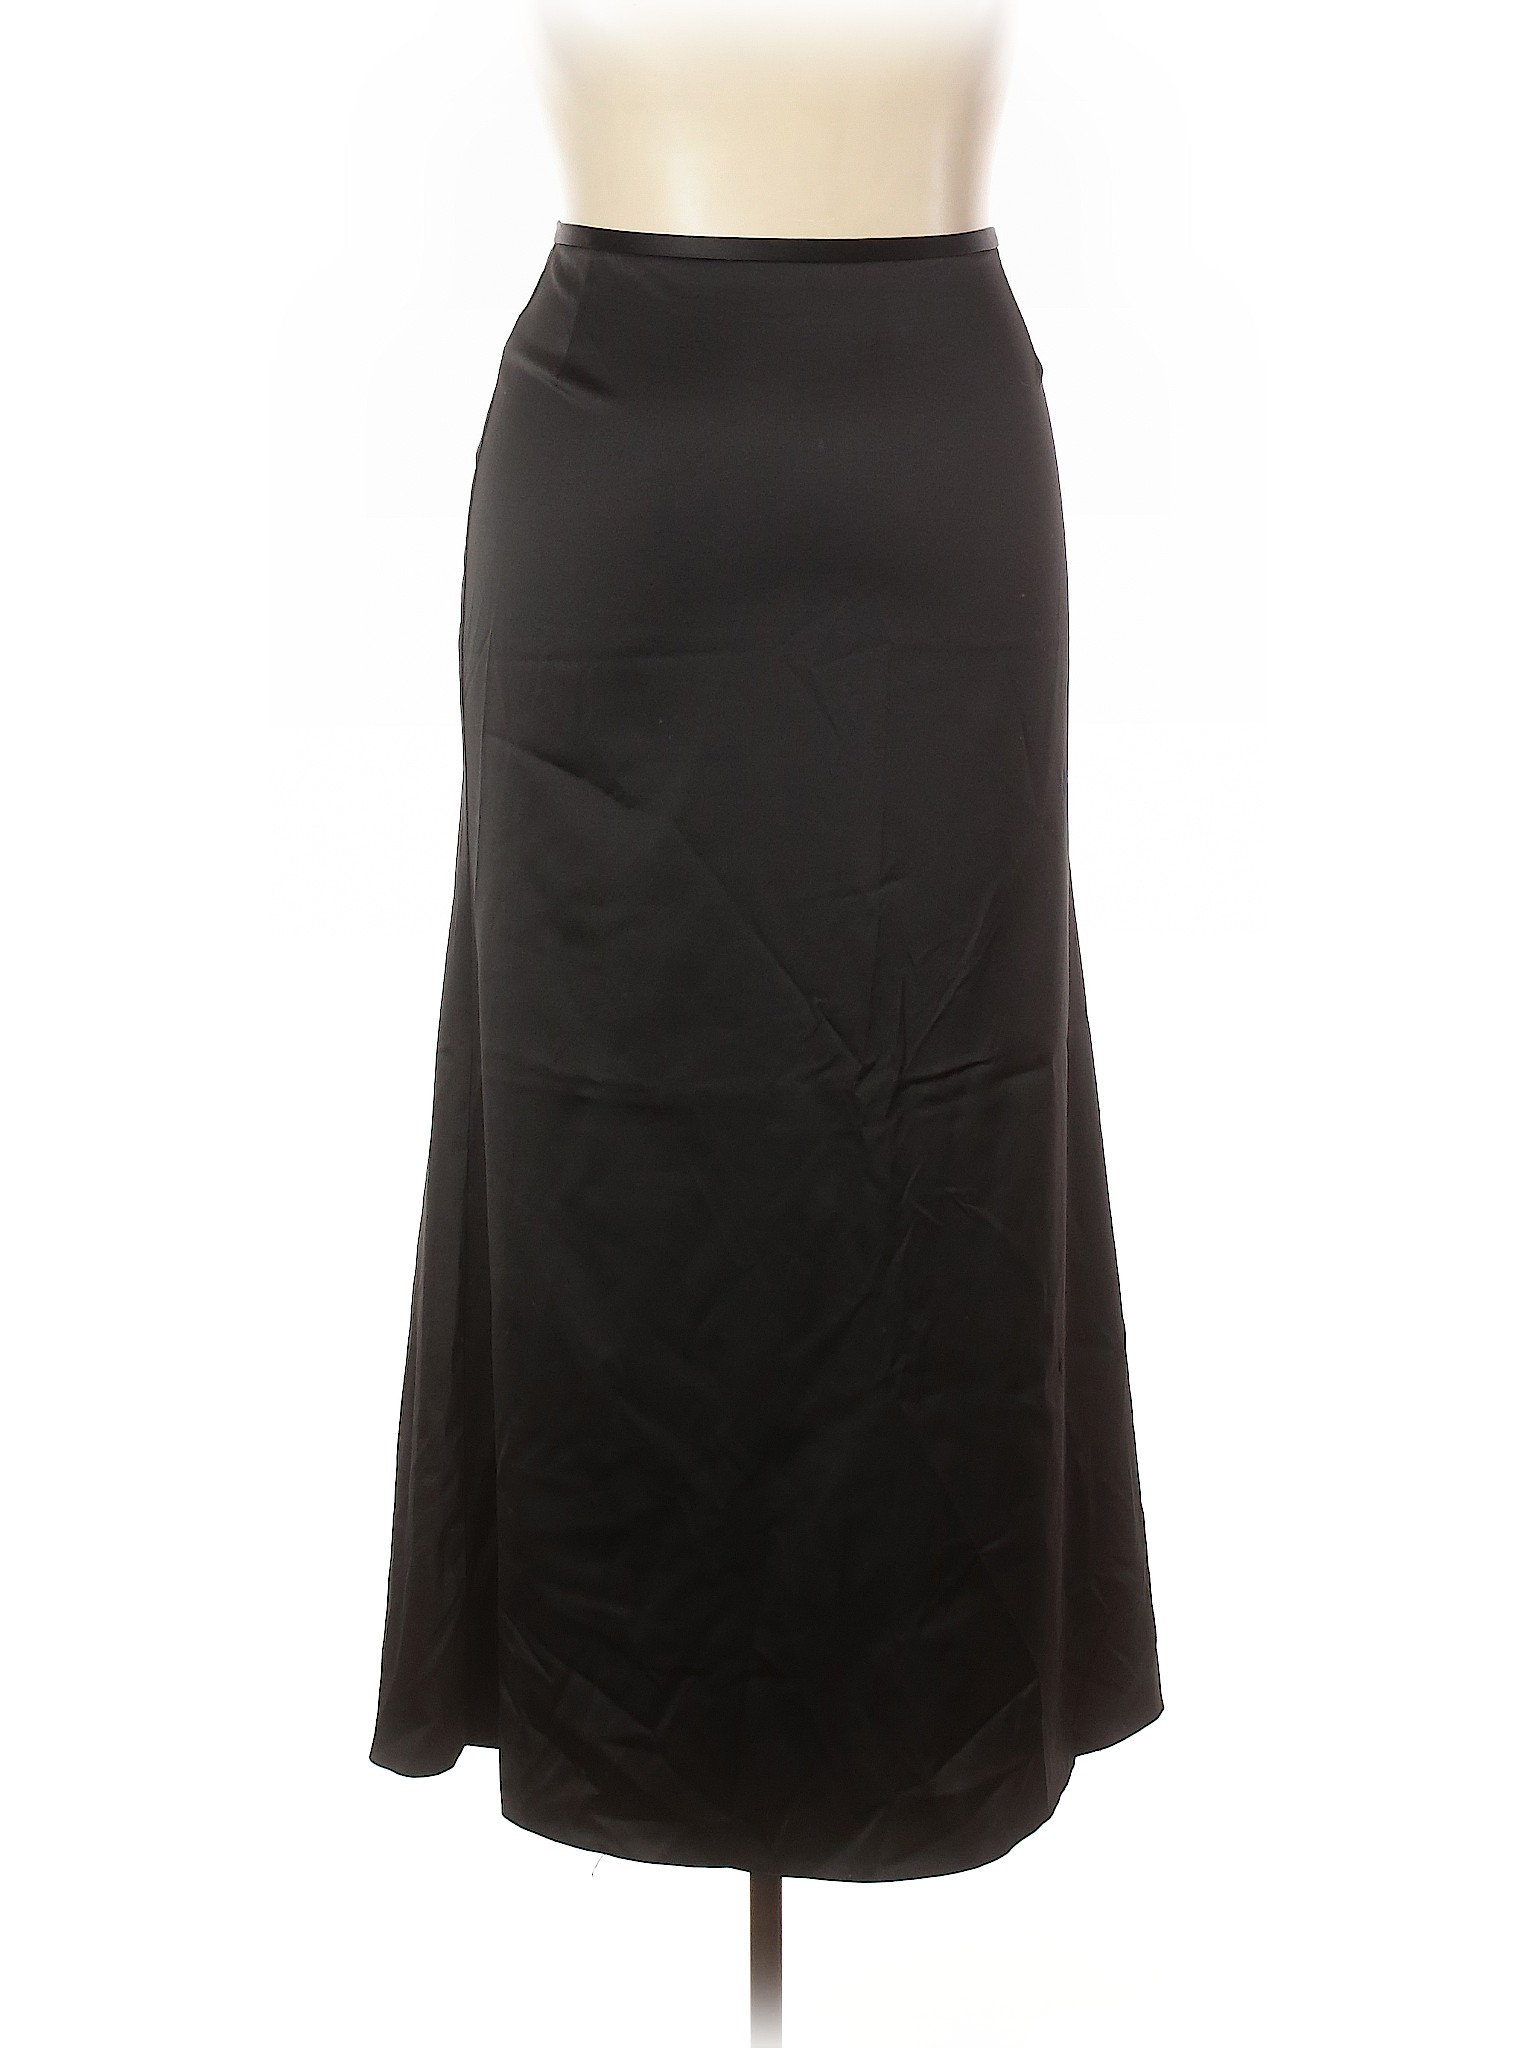 JS Collection Women Black Casual Skirt 16 | eBay